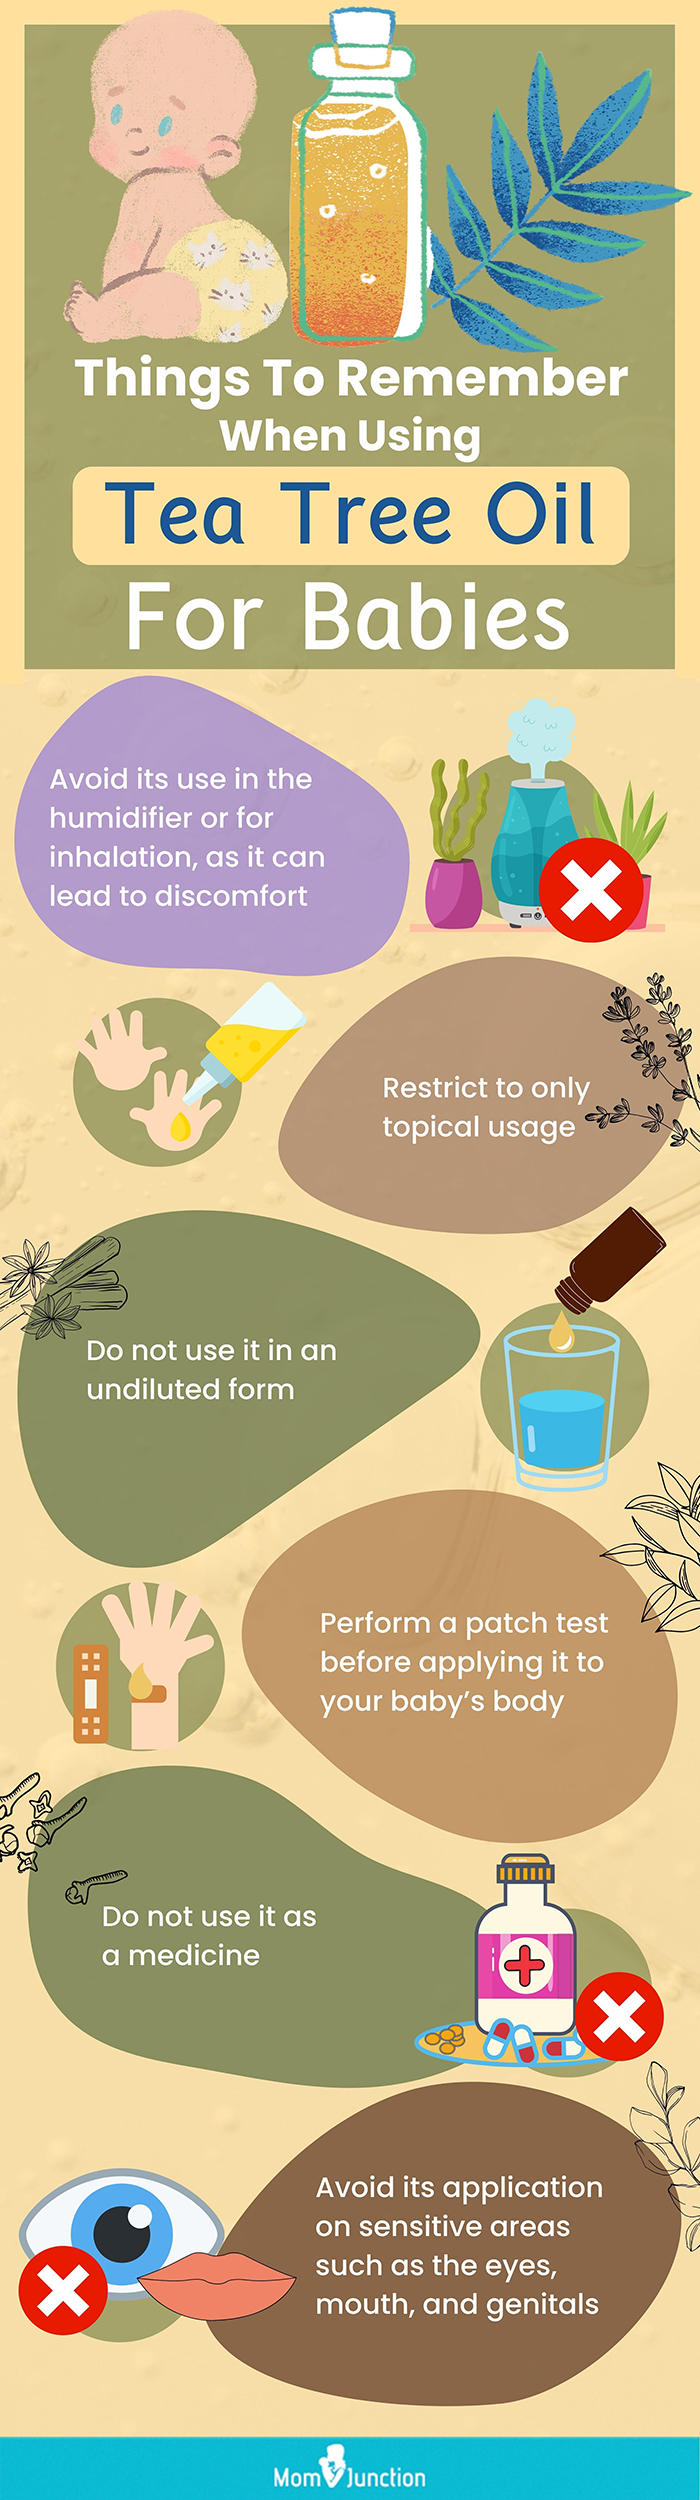 Tea tree oil: Benefits and uses